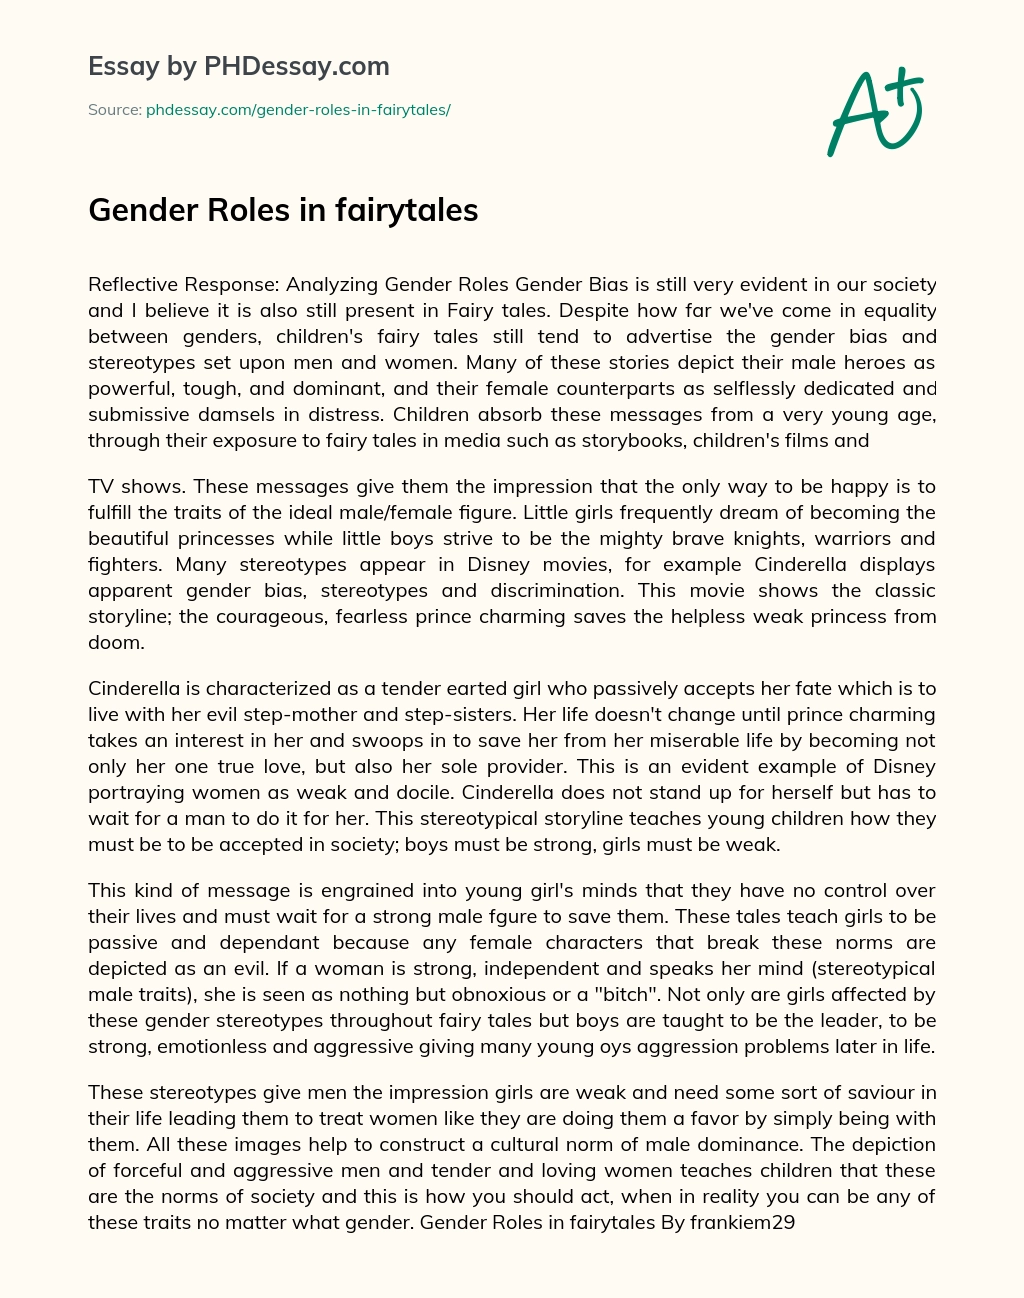 Gender Roles in fairytales essay